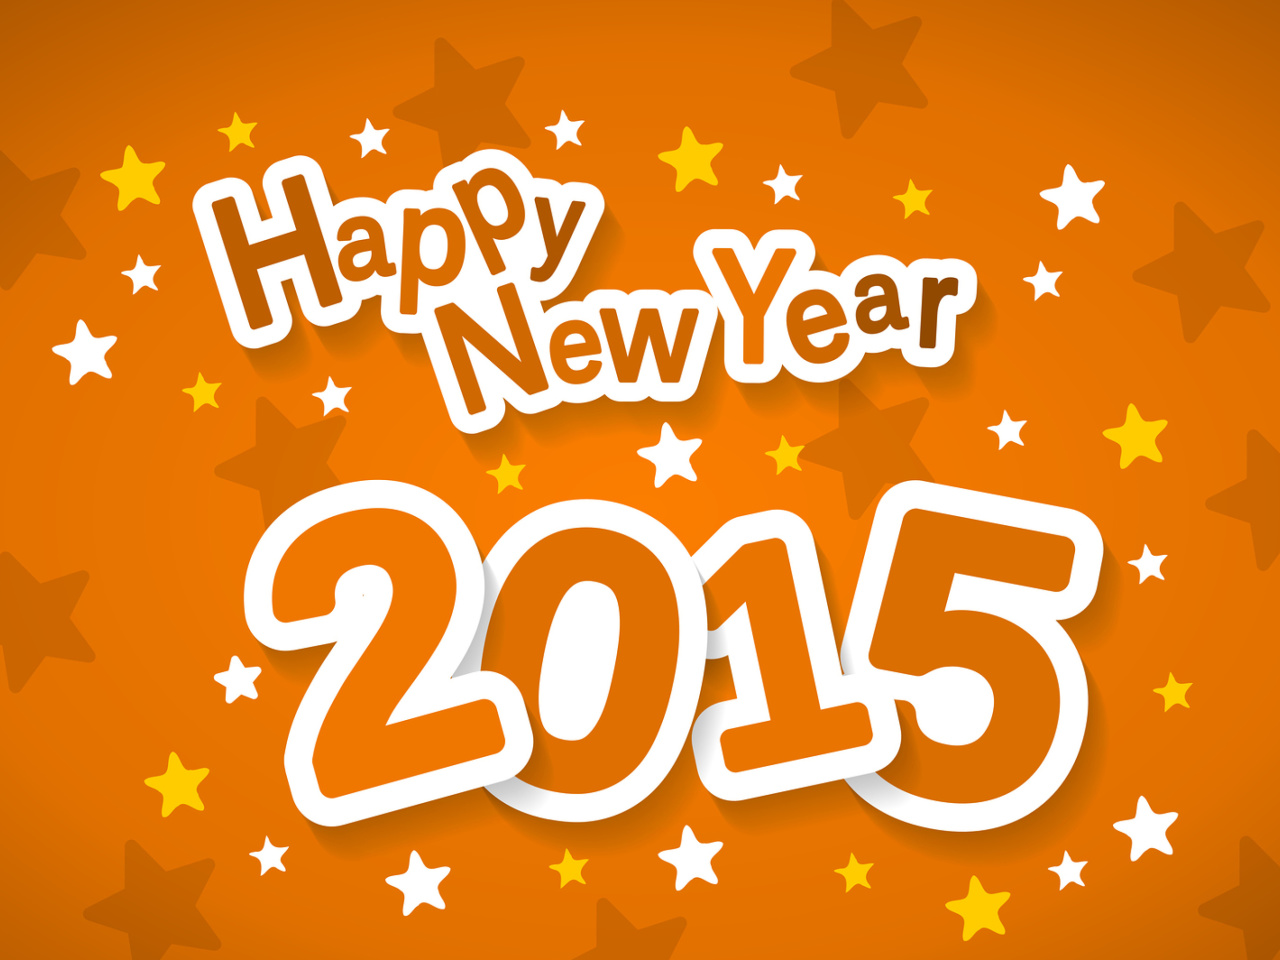 Happy New Year 2015 wallpaper 1280x960